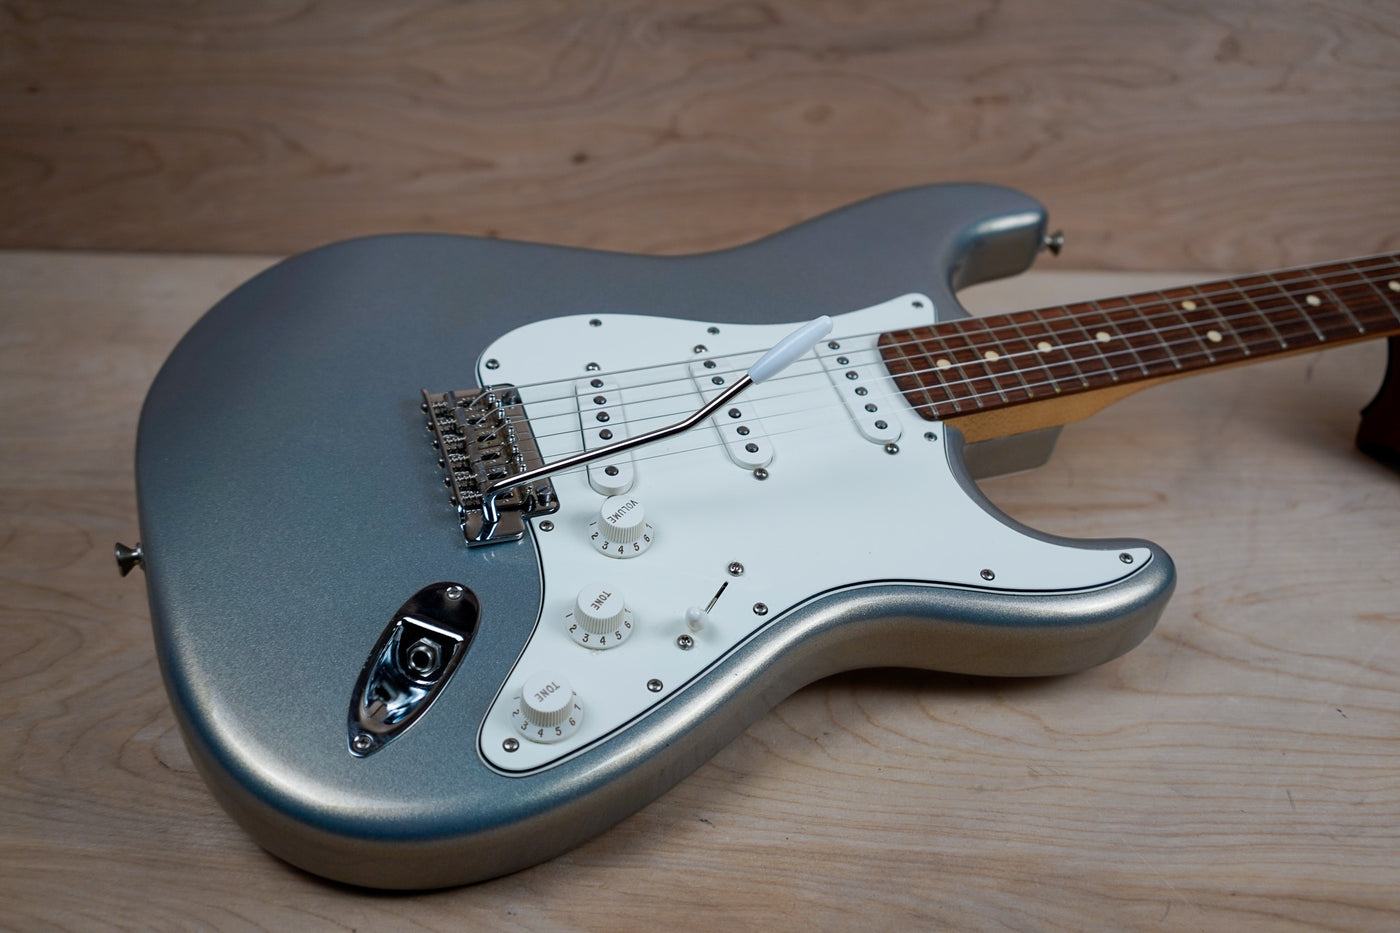 Fender Player Stratocaster 2019 Silver w/ Bag